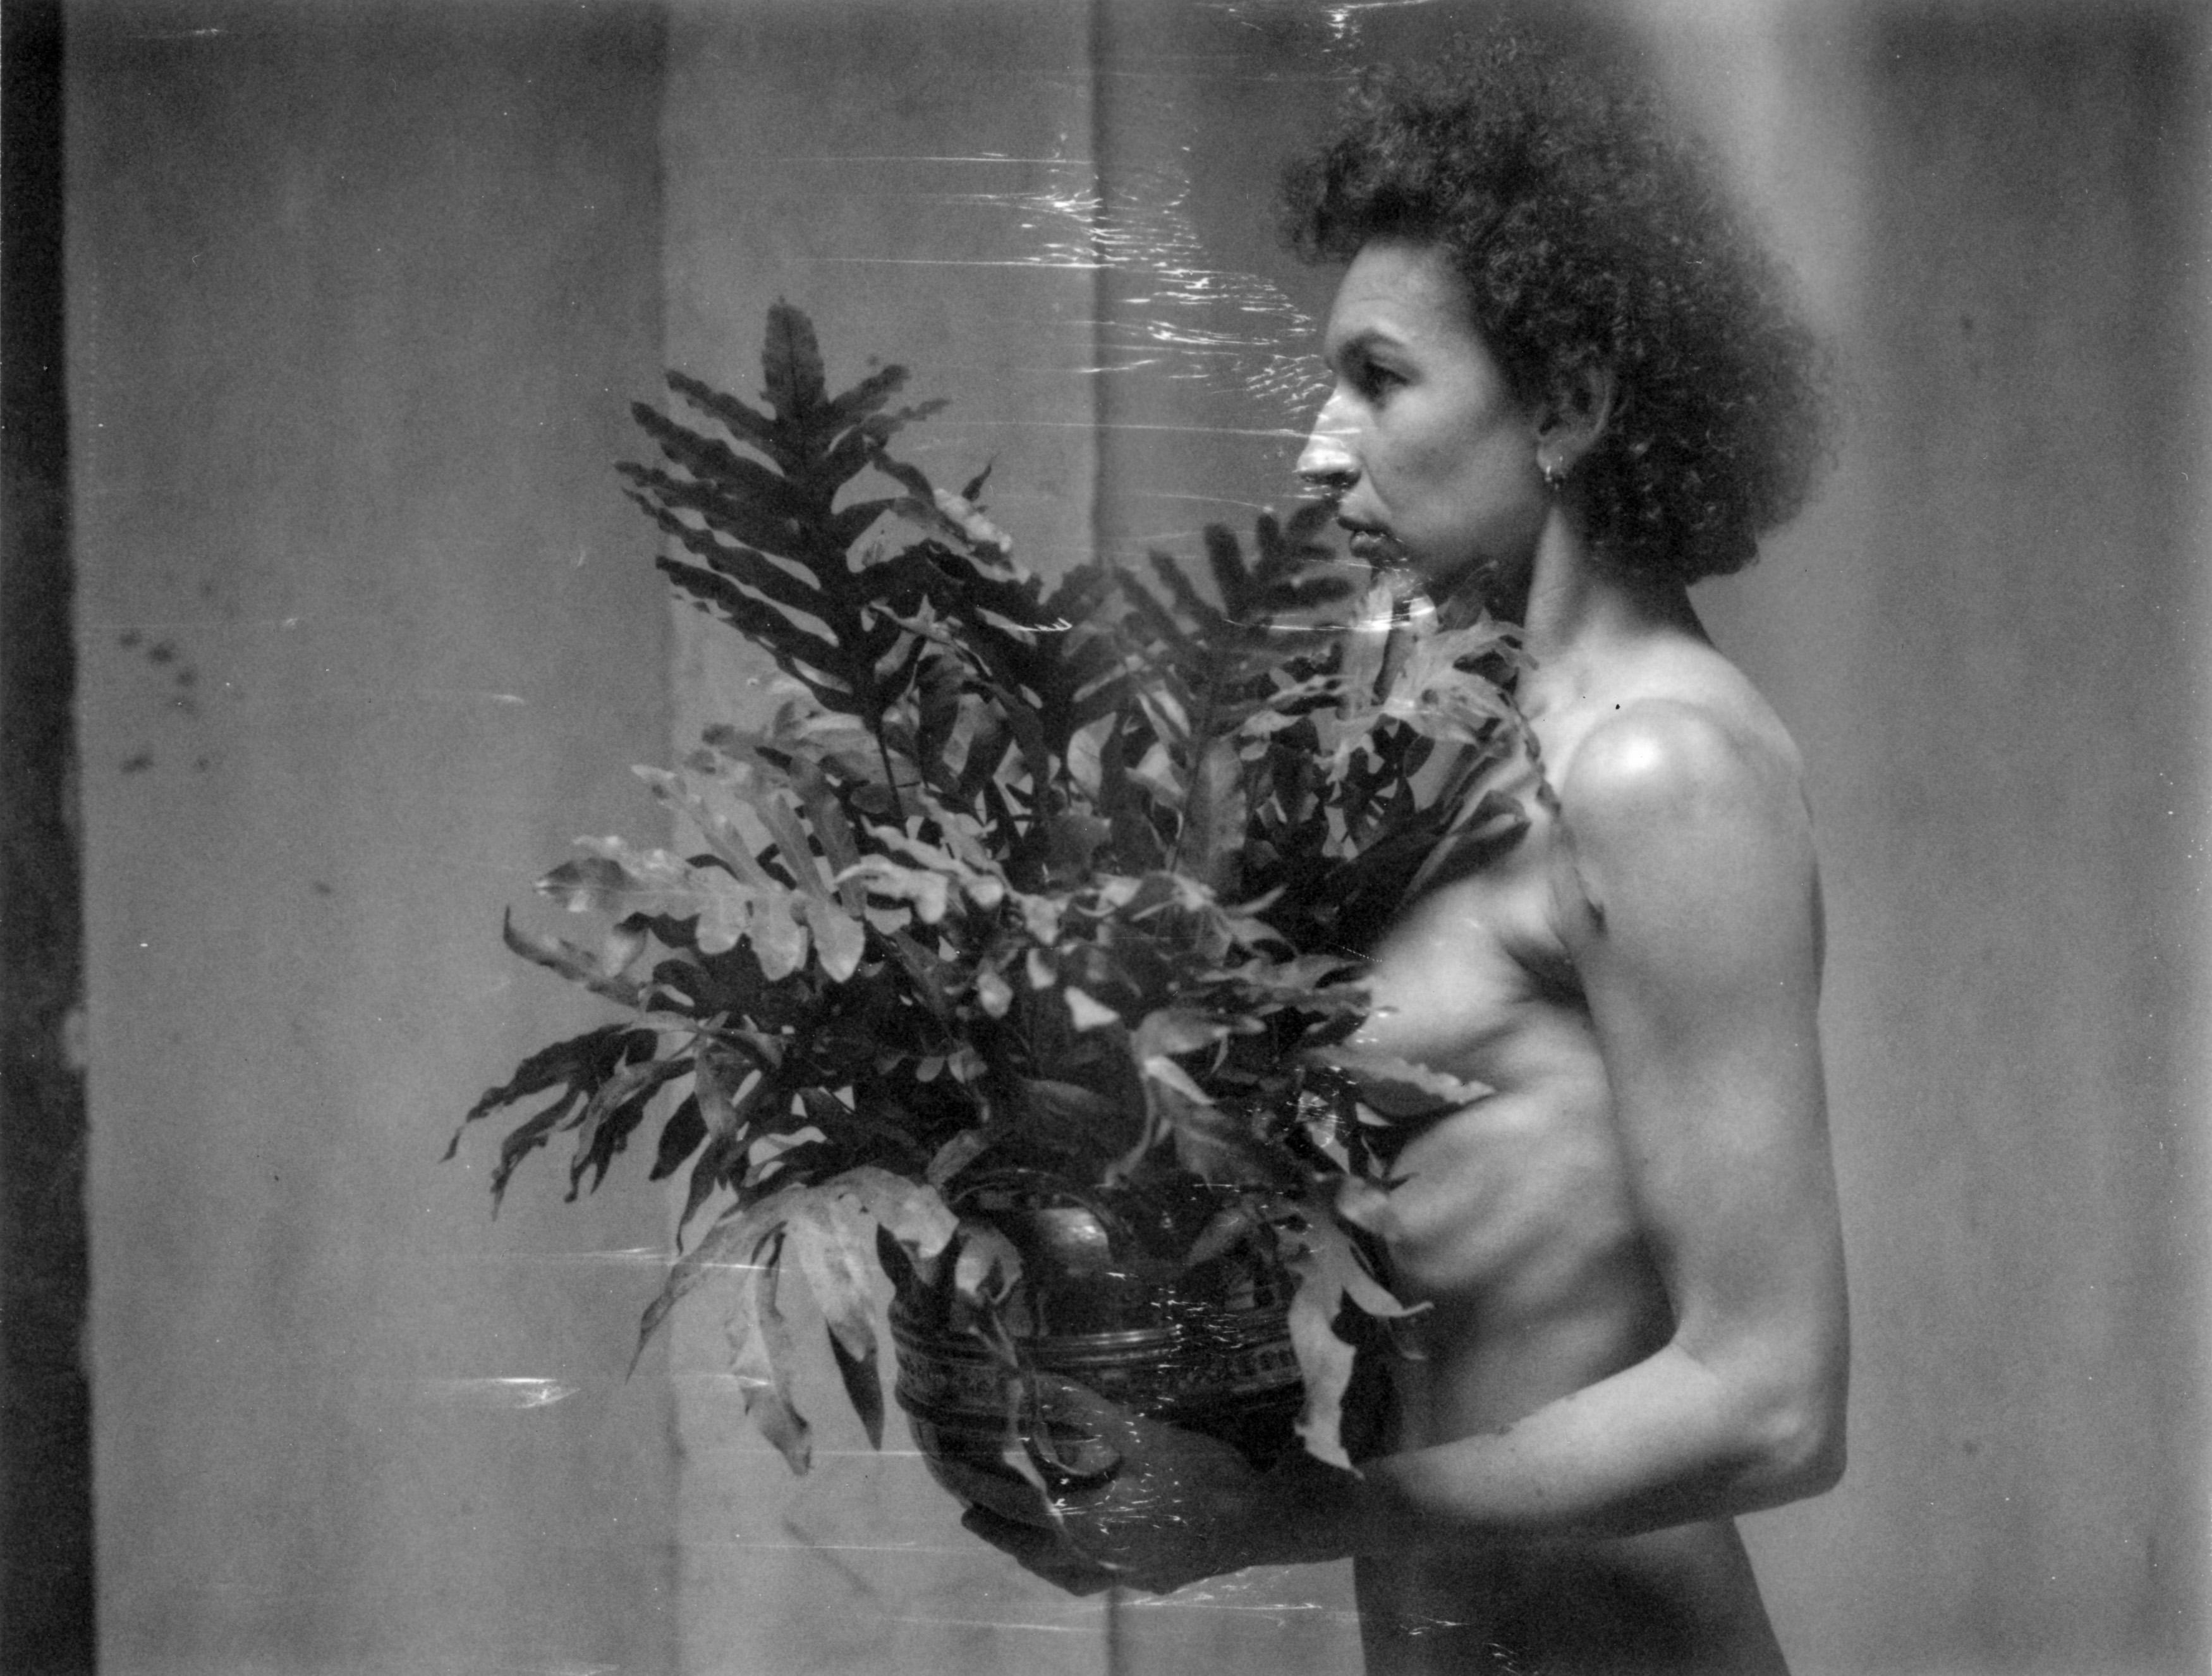 Kirsten Thys van den Audenaerde Nude Photograph - Carried away -Contemporary, Polaroid, Black and White, Women, 21st Century, Nude